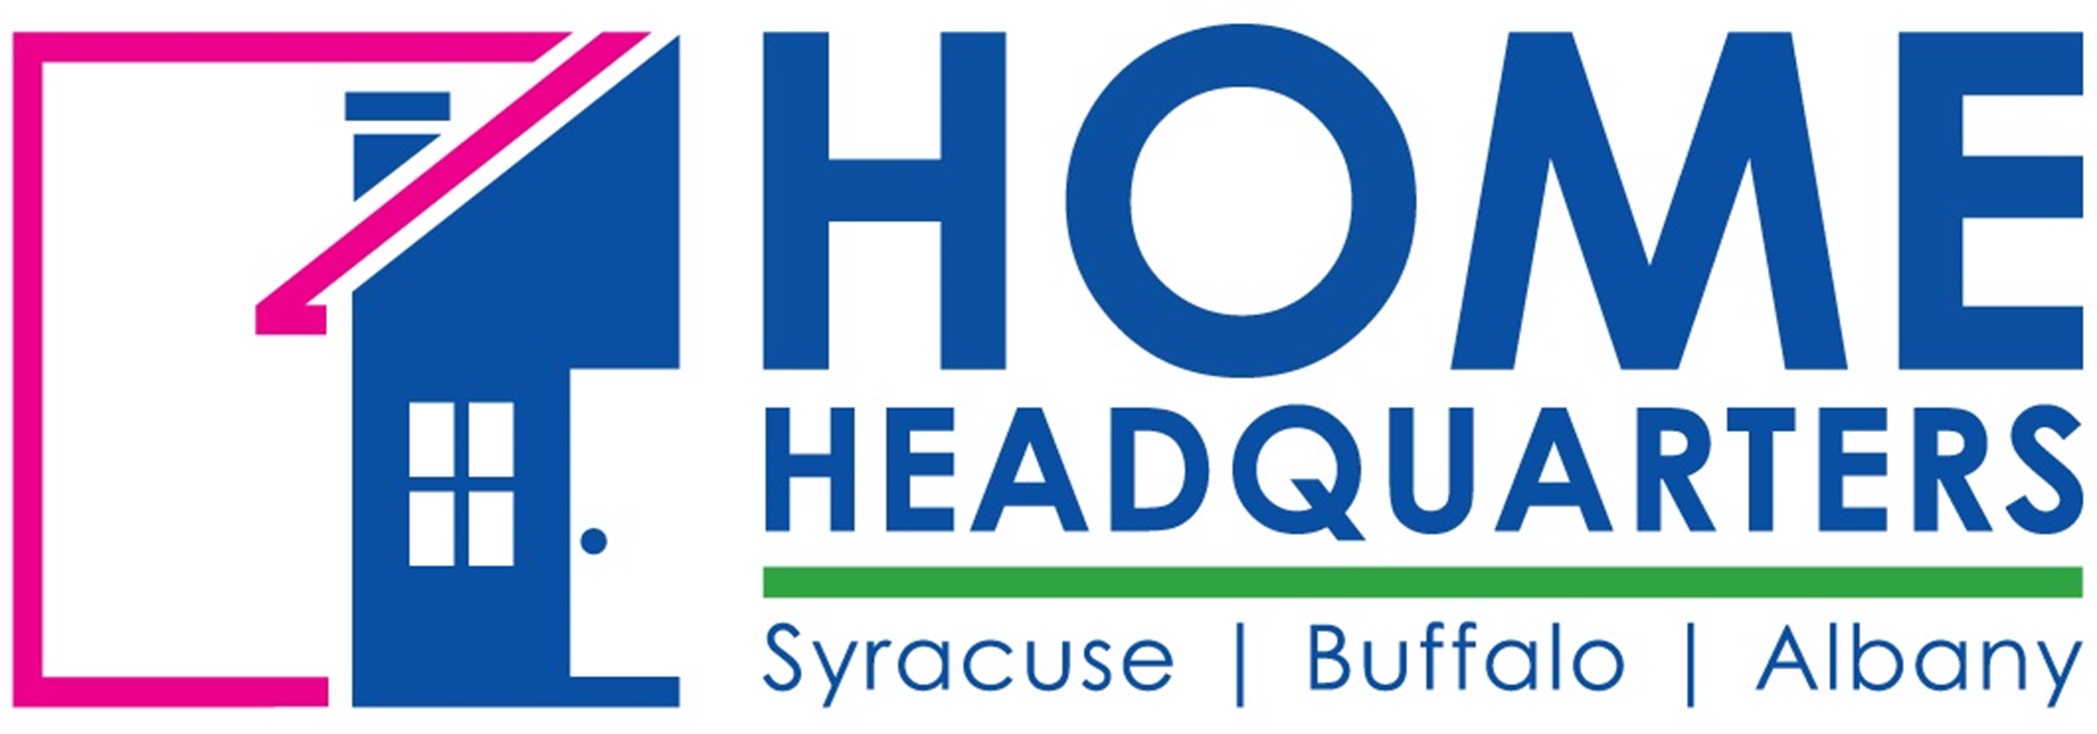 HHQ Upstate Logo - Transparent.png